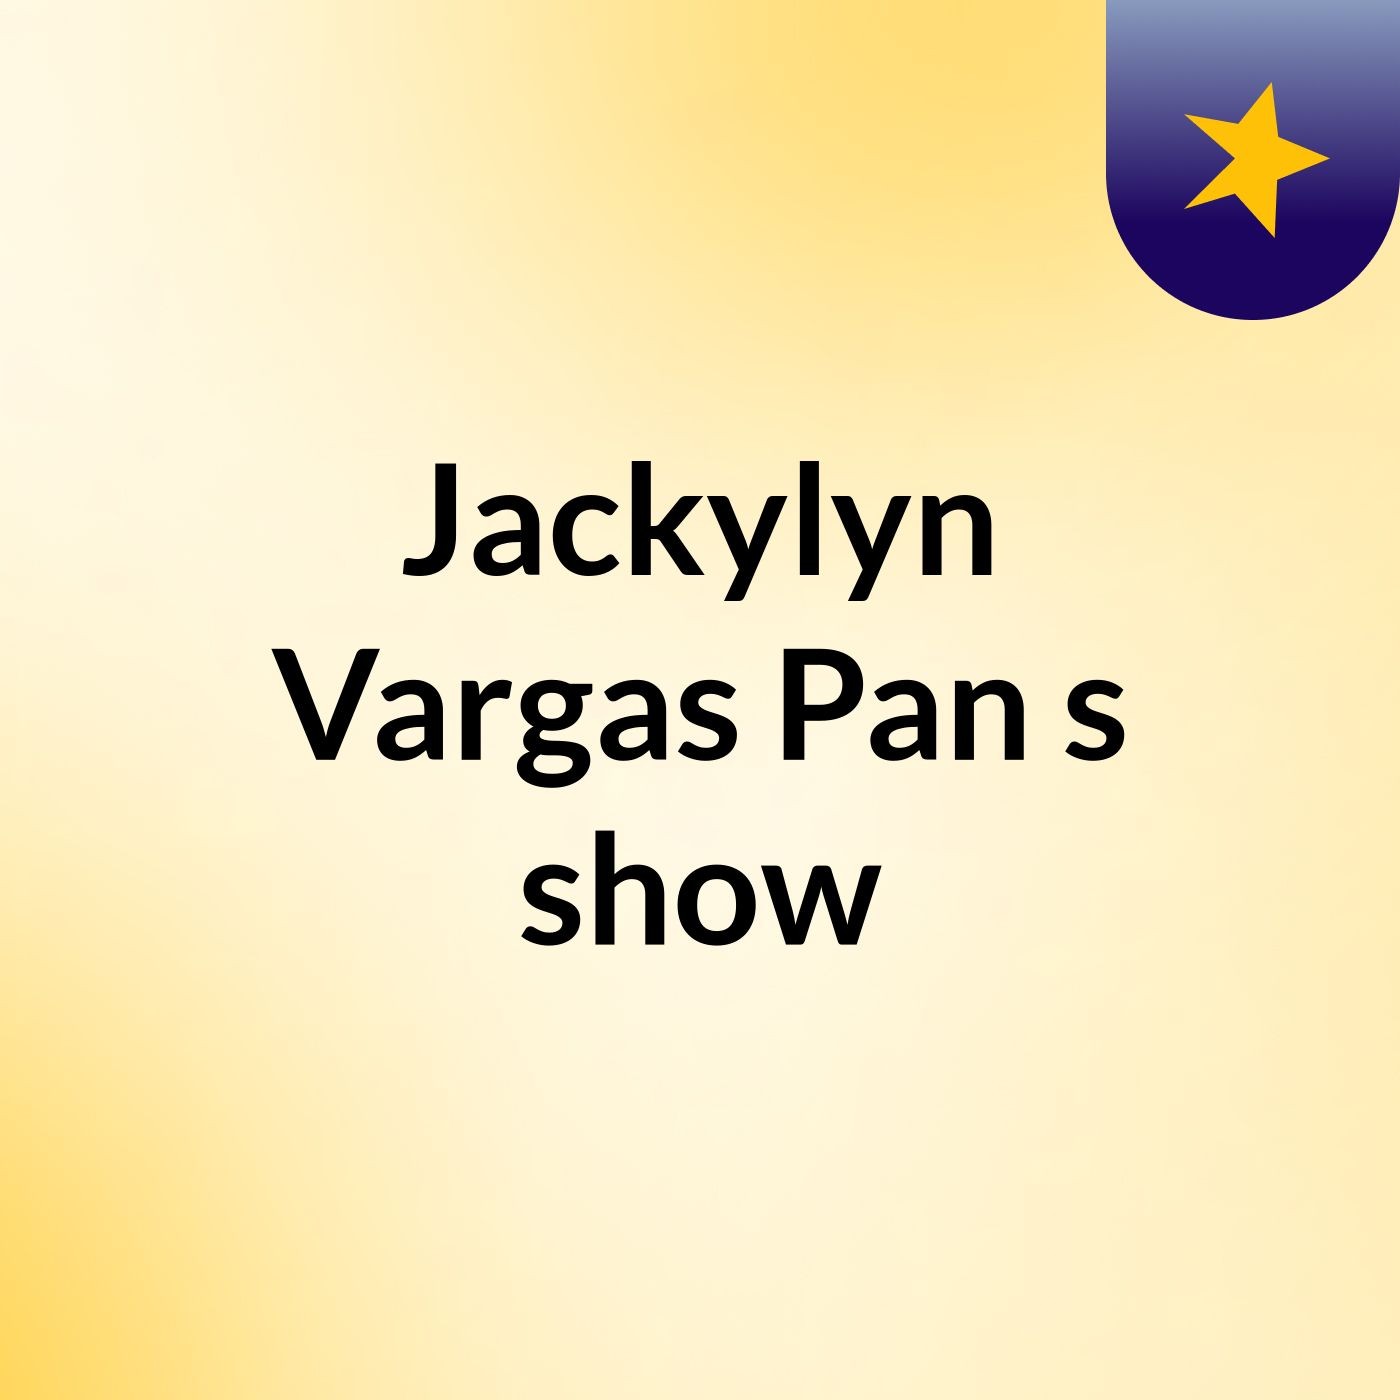 Jackylyn Vargas Pan's show